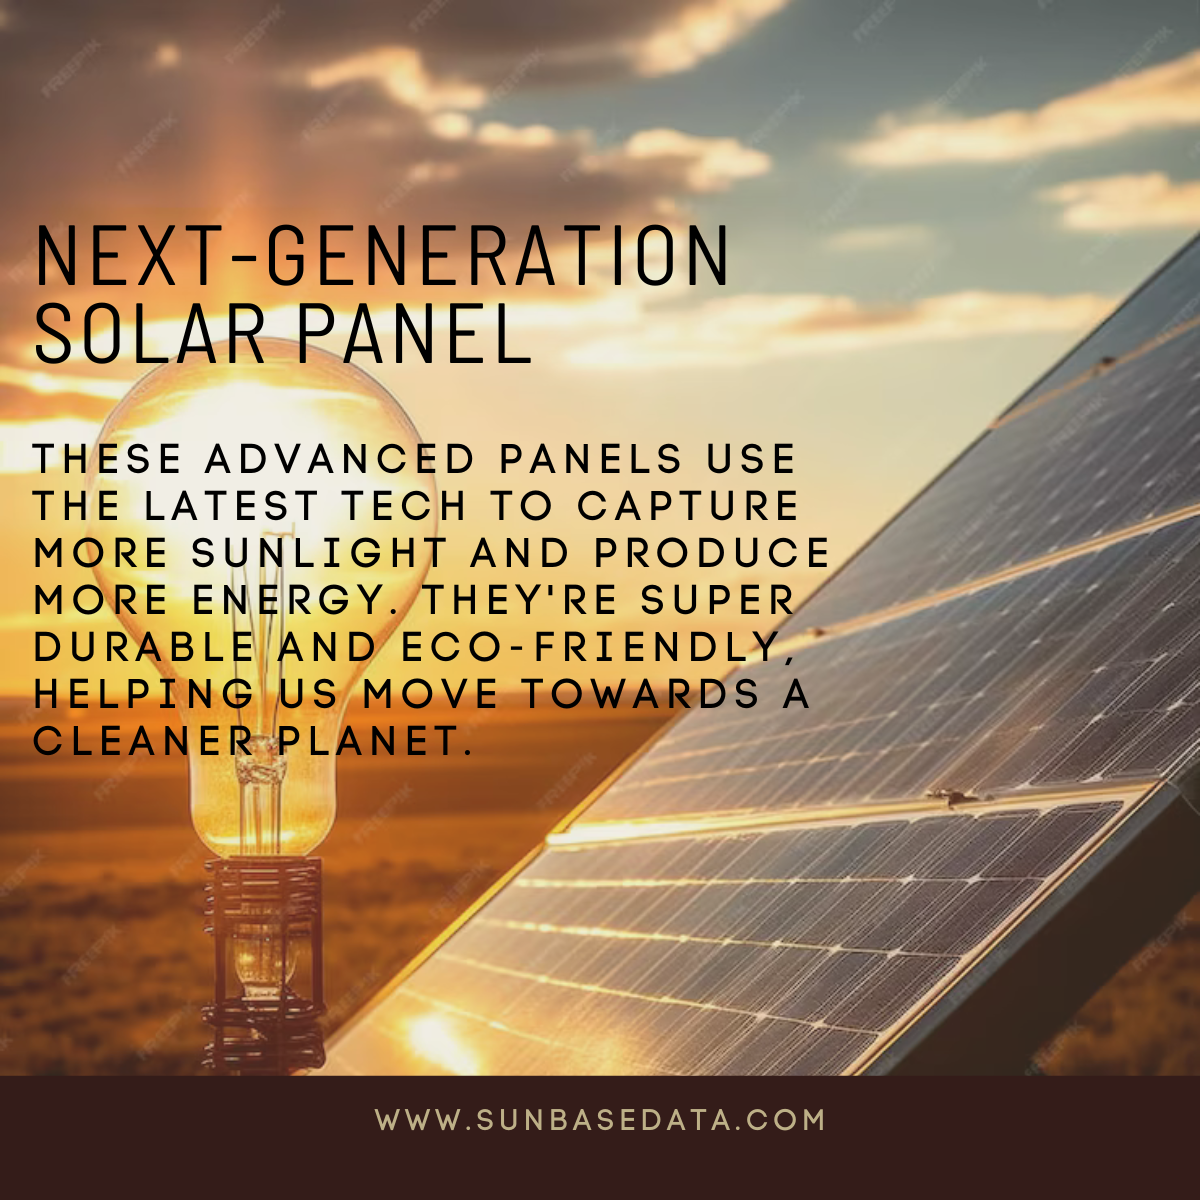 Next Generation solar panel